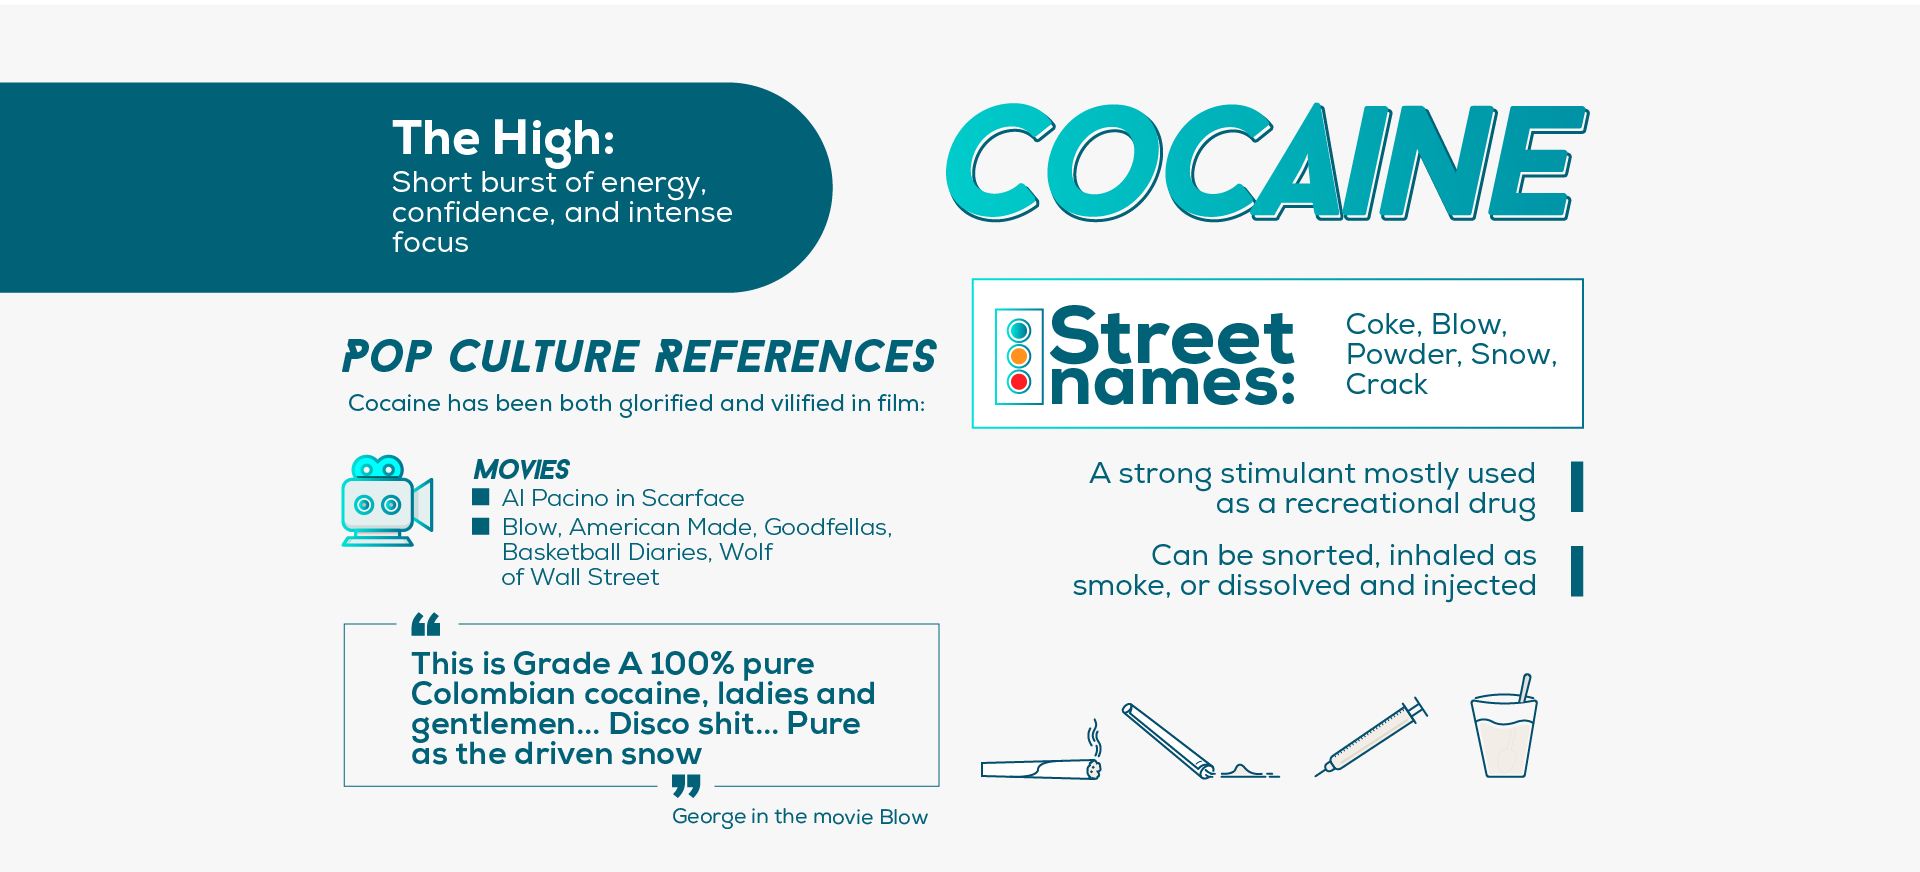 How Cocaine Influenced Pop Culture